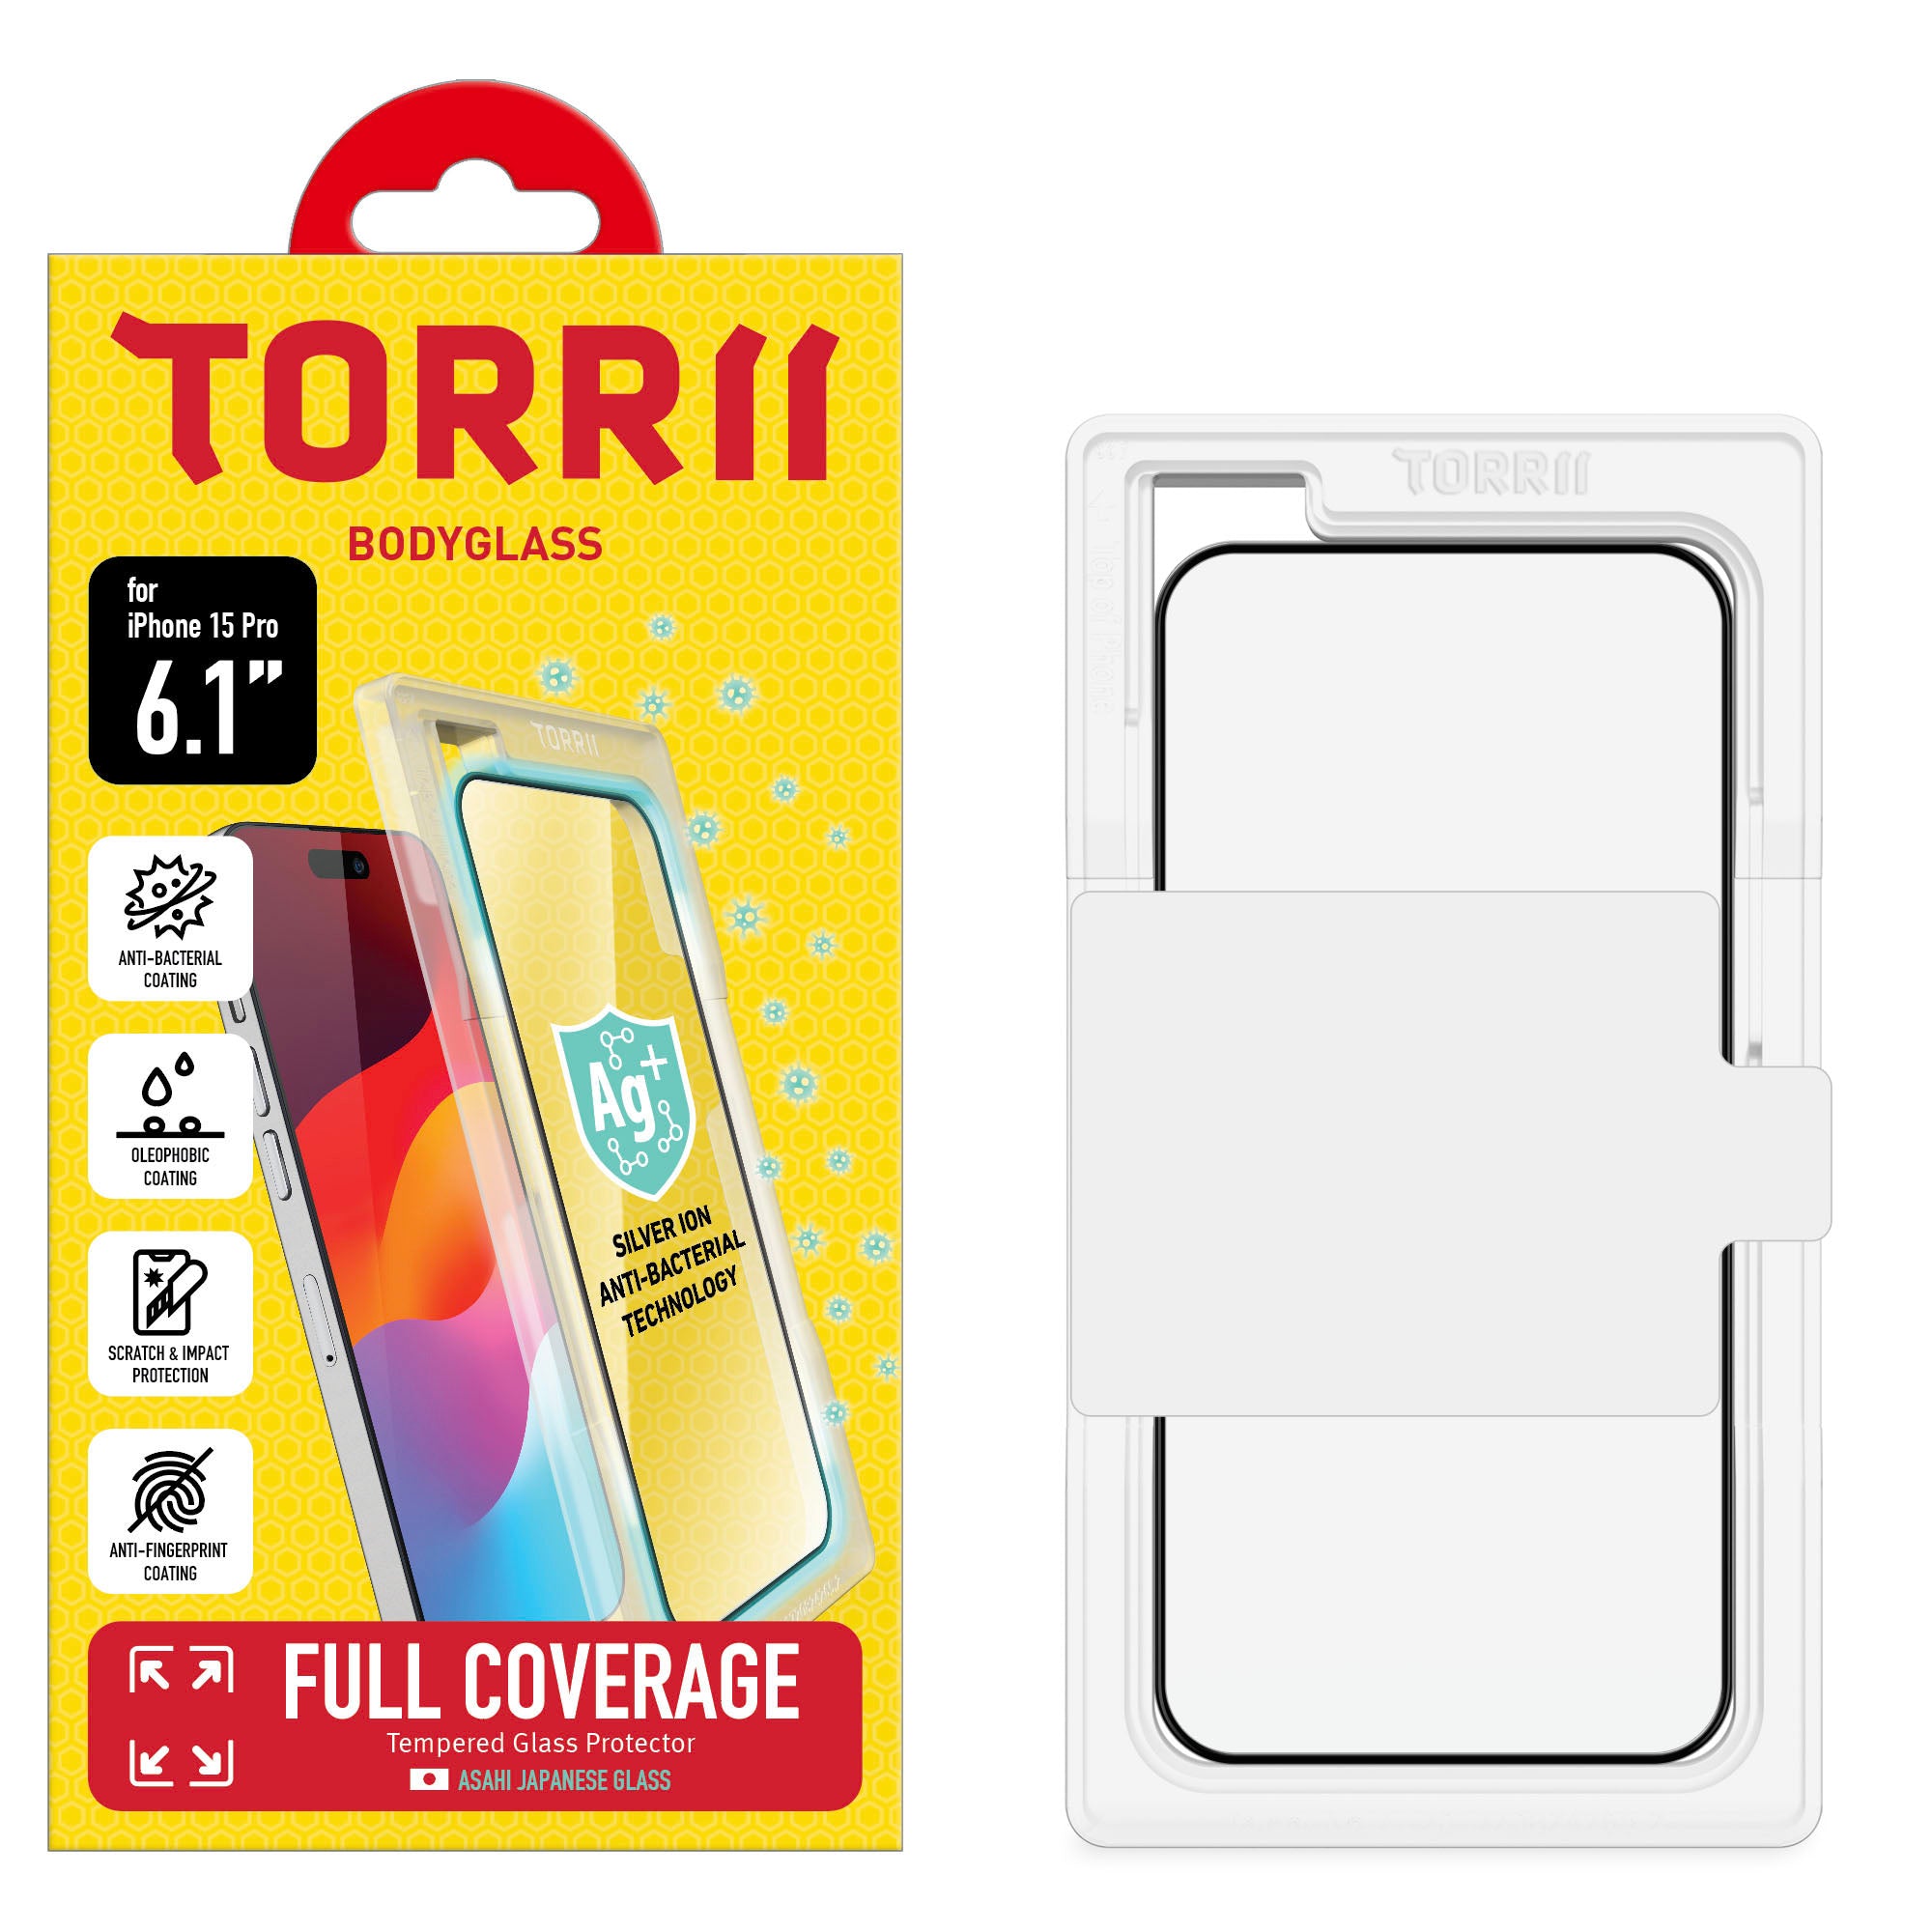 iPhone 15 Pro Torrii Bodyglass Screen Protector Anti-Bacterial Coating - Full Coverage Black